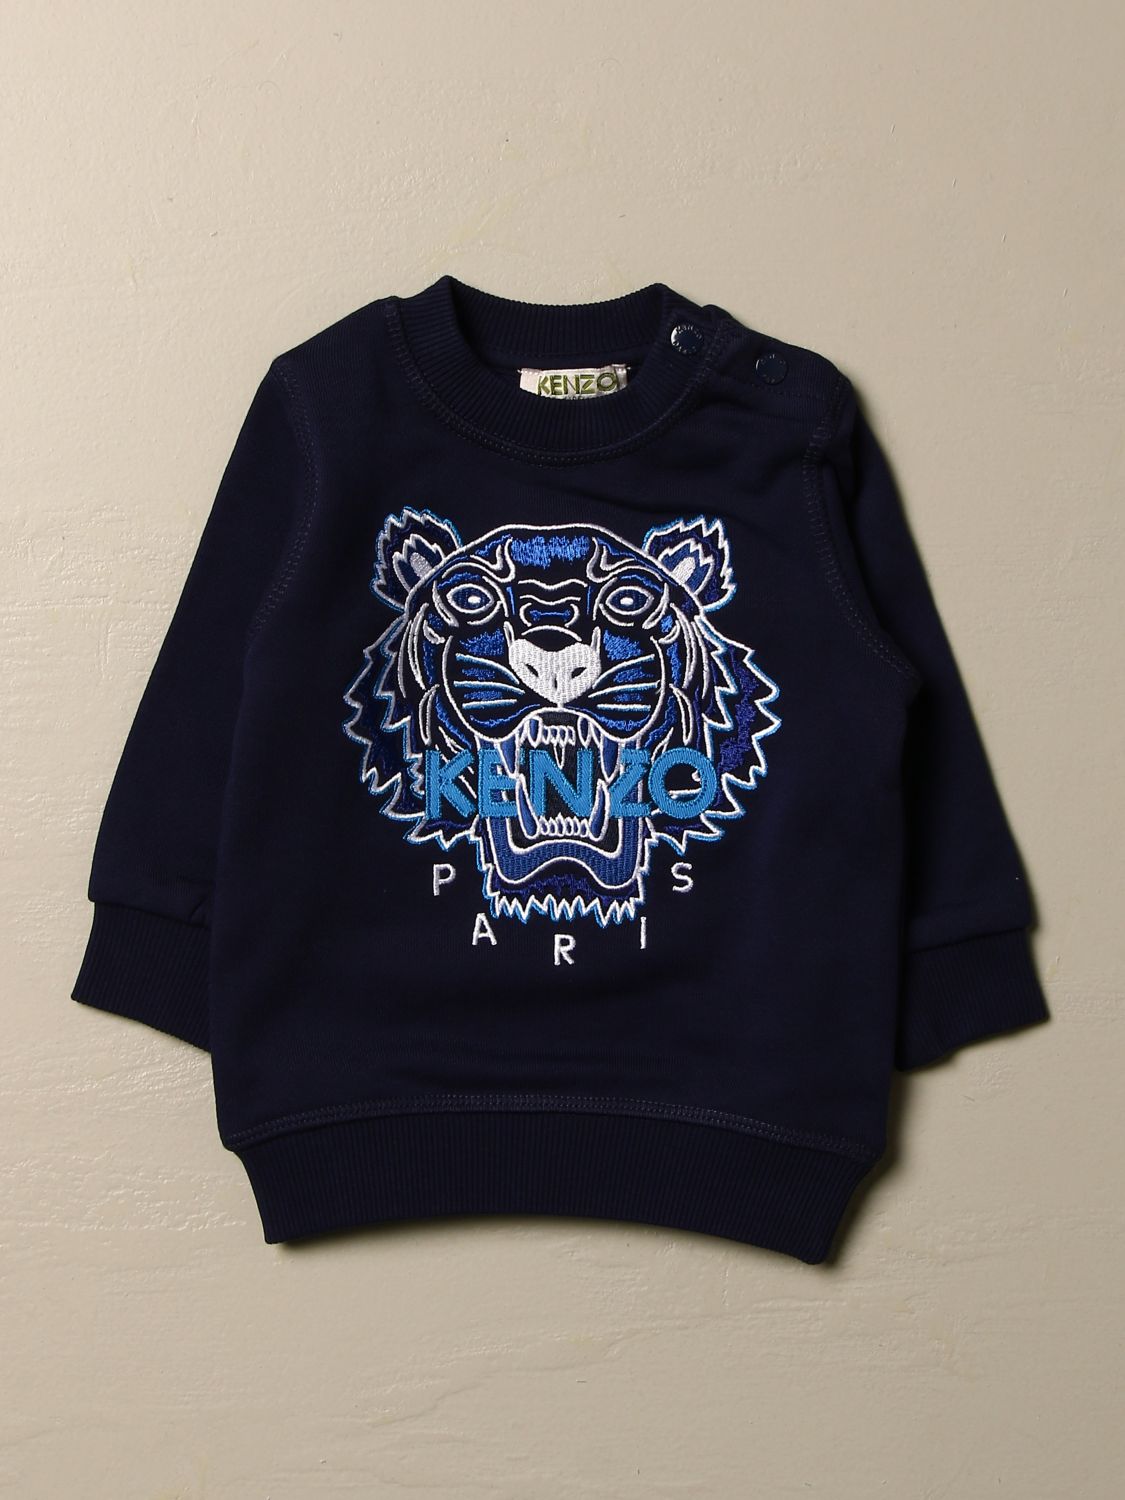 kenzo blue sweater